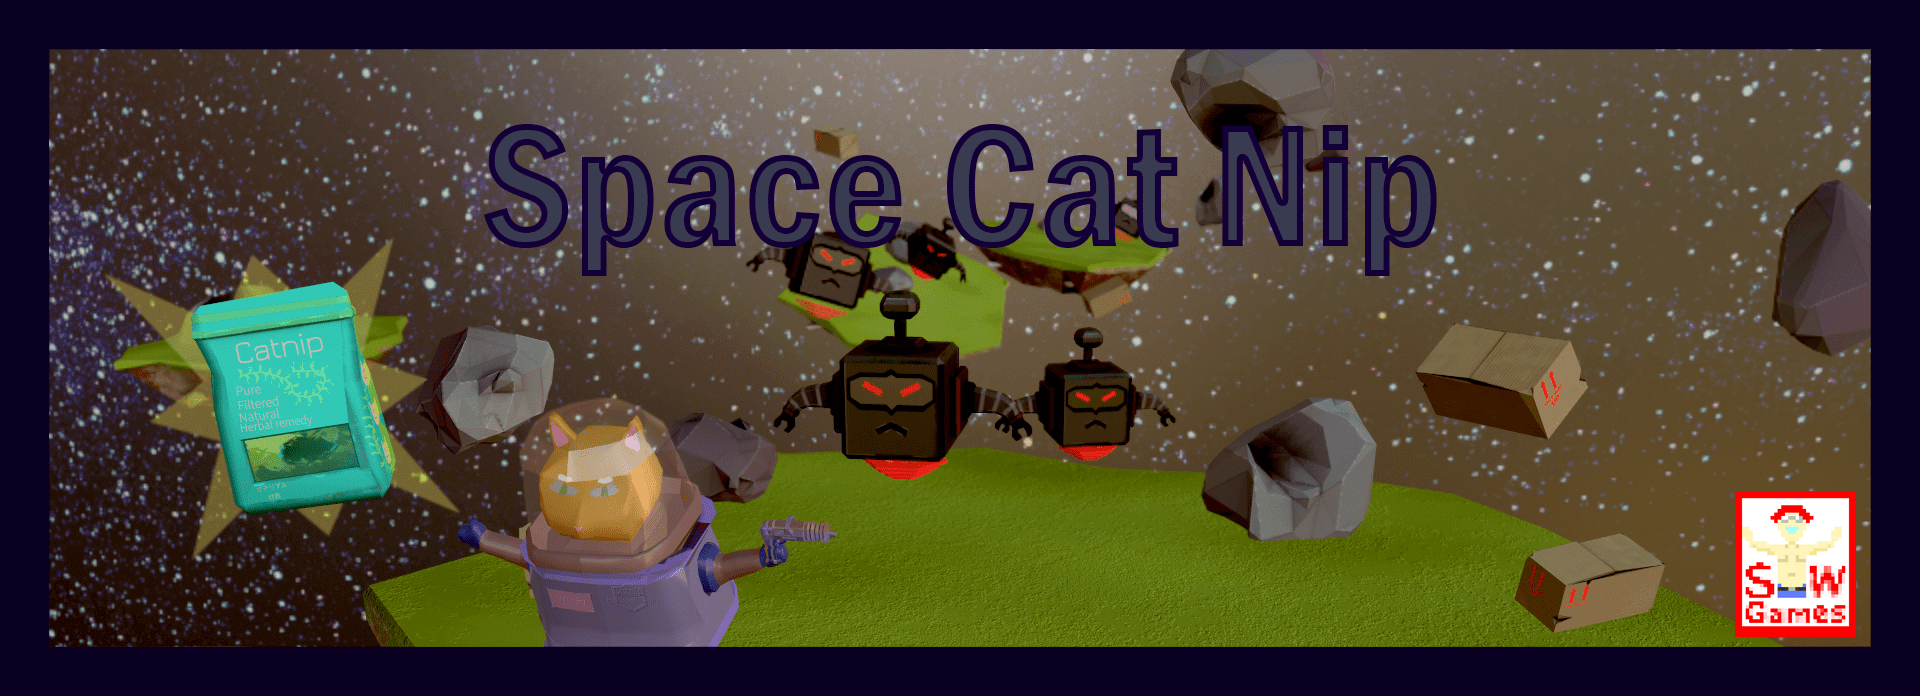 Space Cat Nip